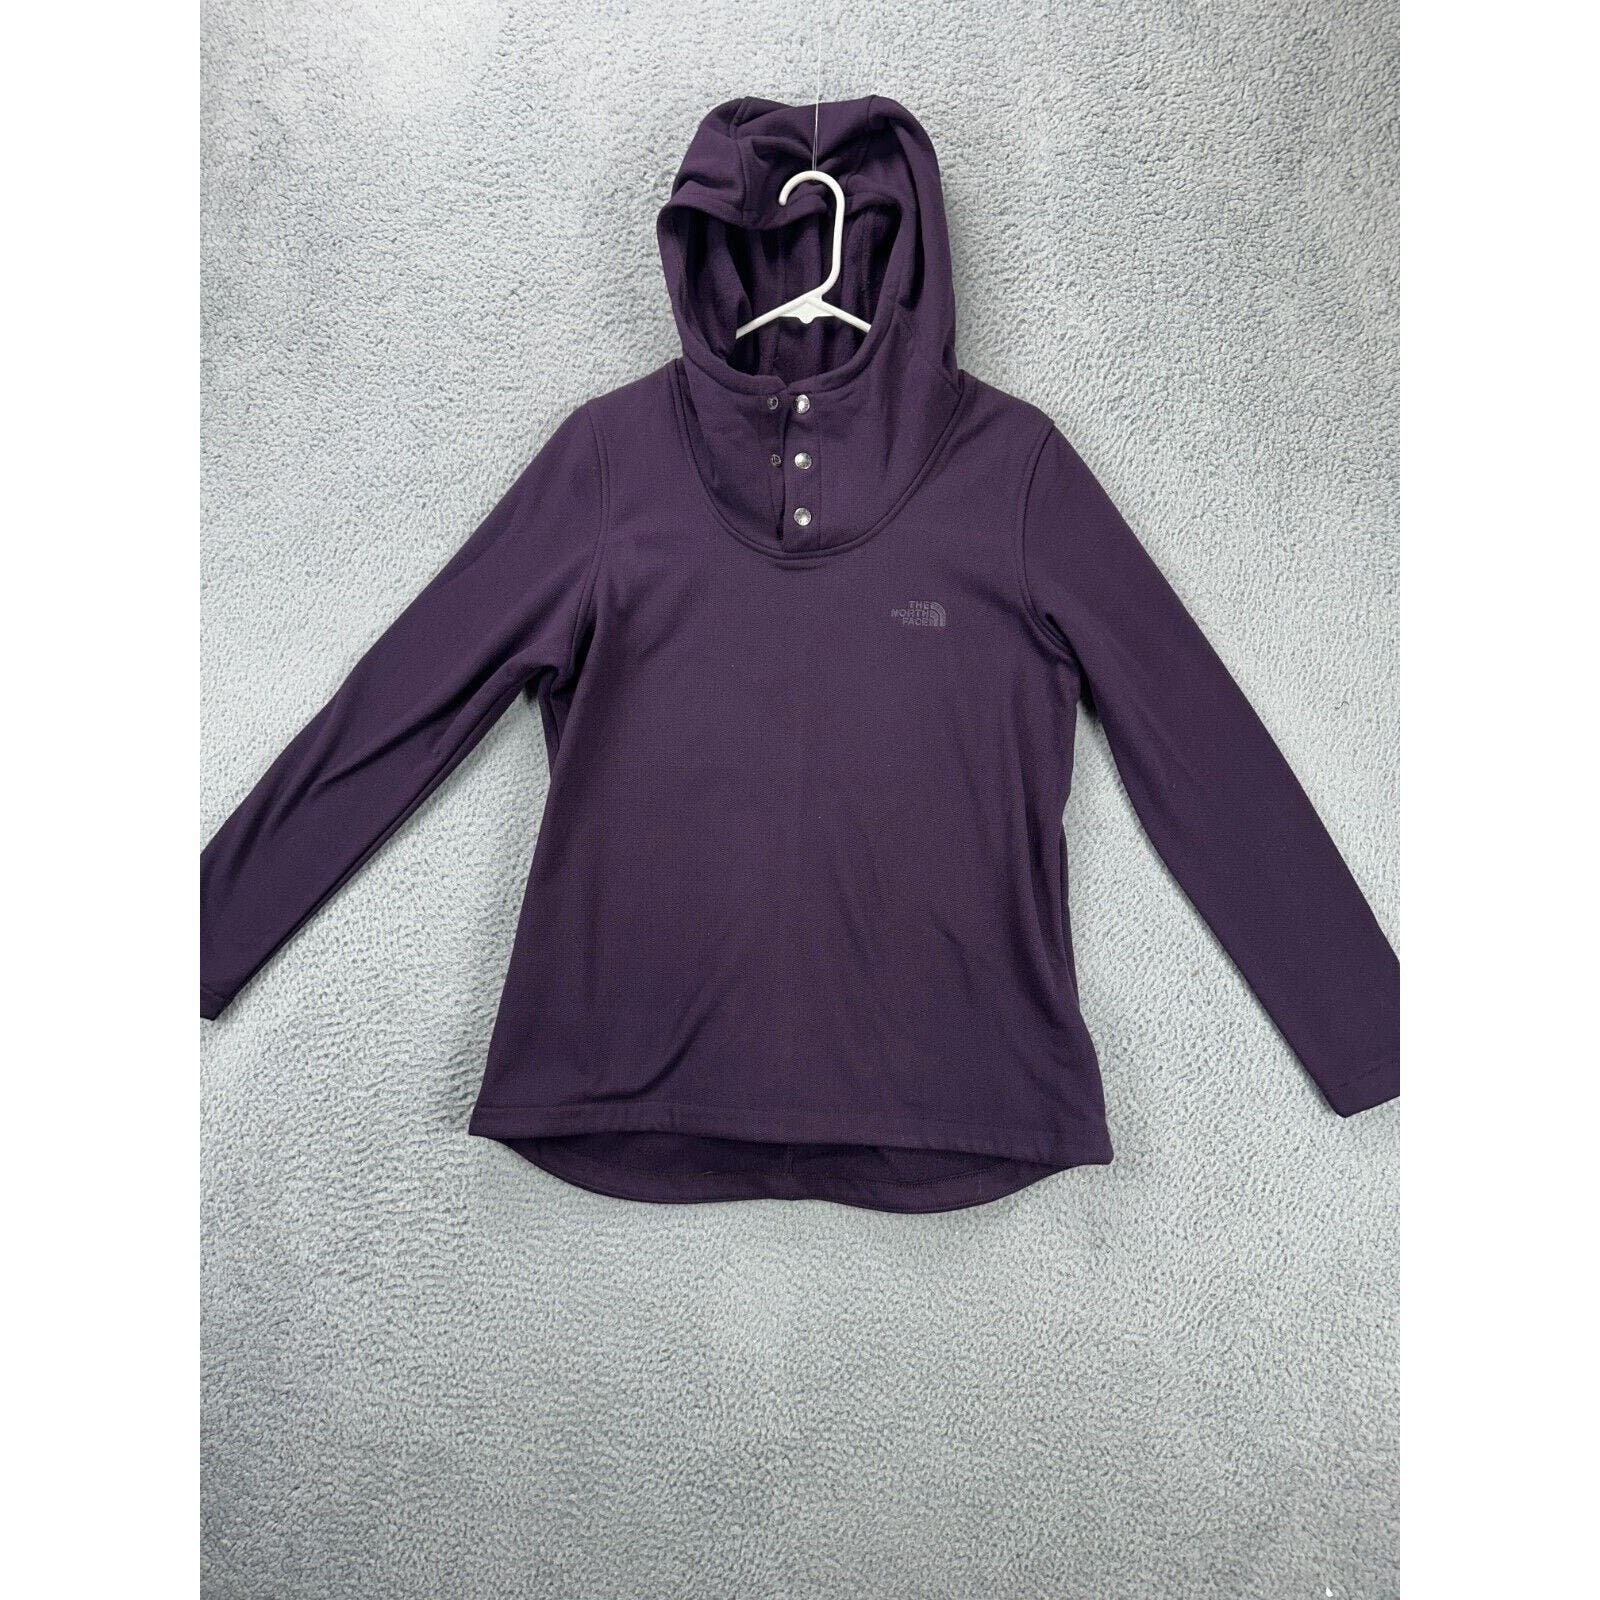 Classic The North Face Shirt Womens Medium Purple Hooded Long Sleeve Logo Activewear NEW I4crZcnKI Cheap